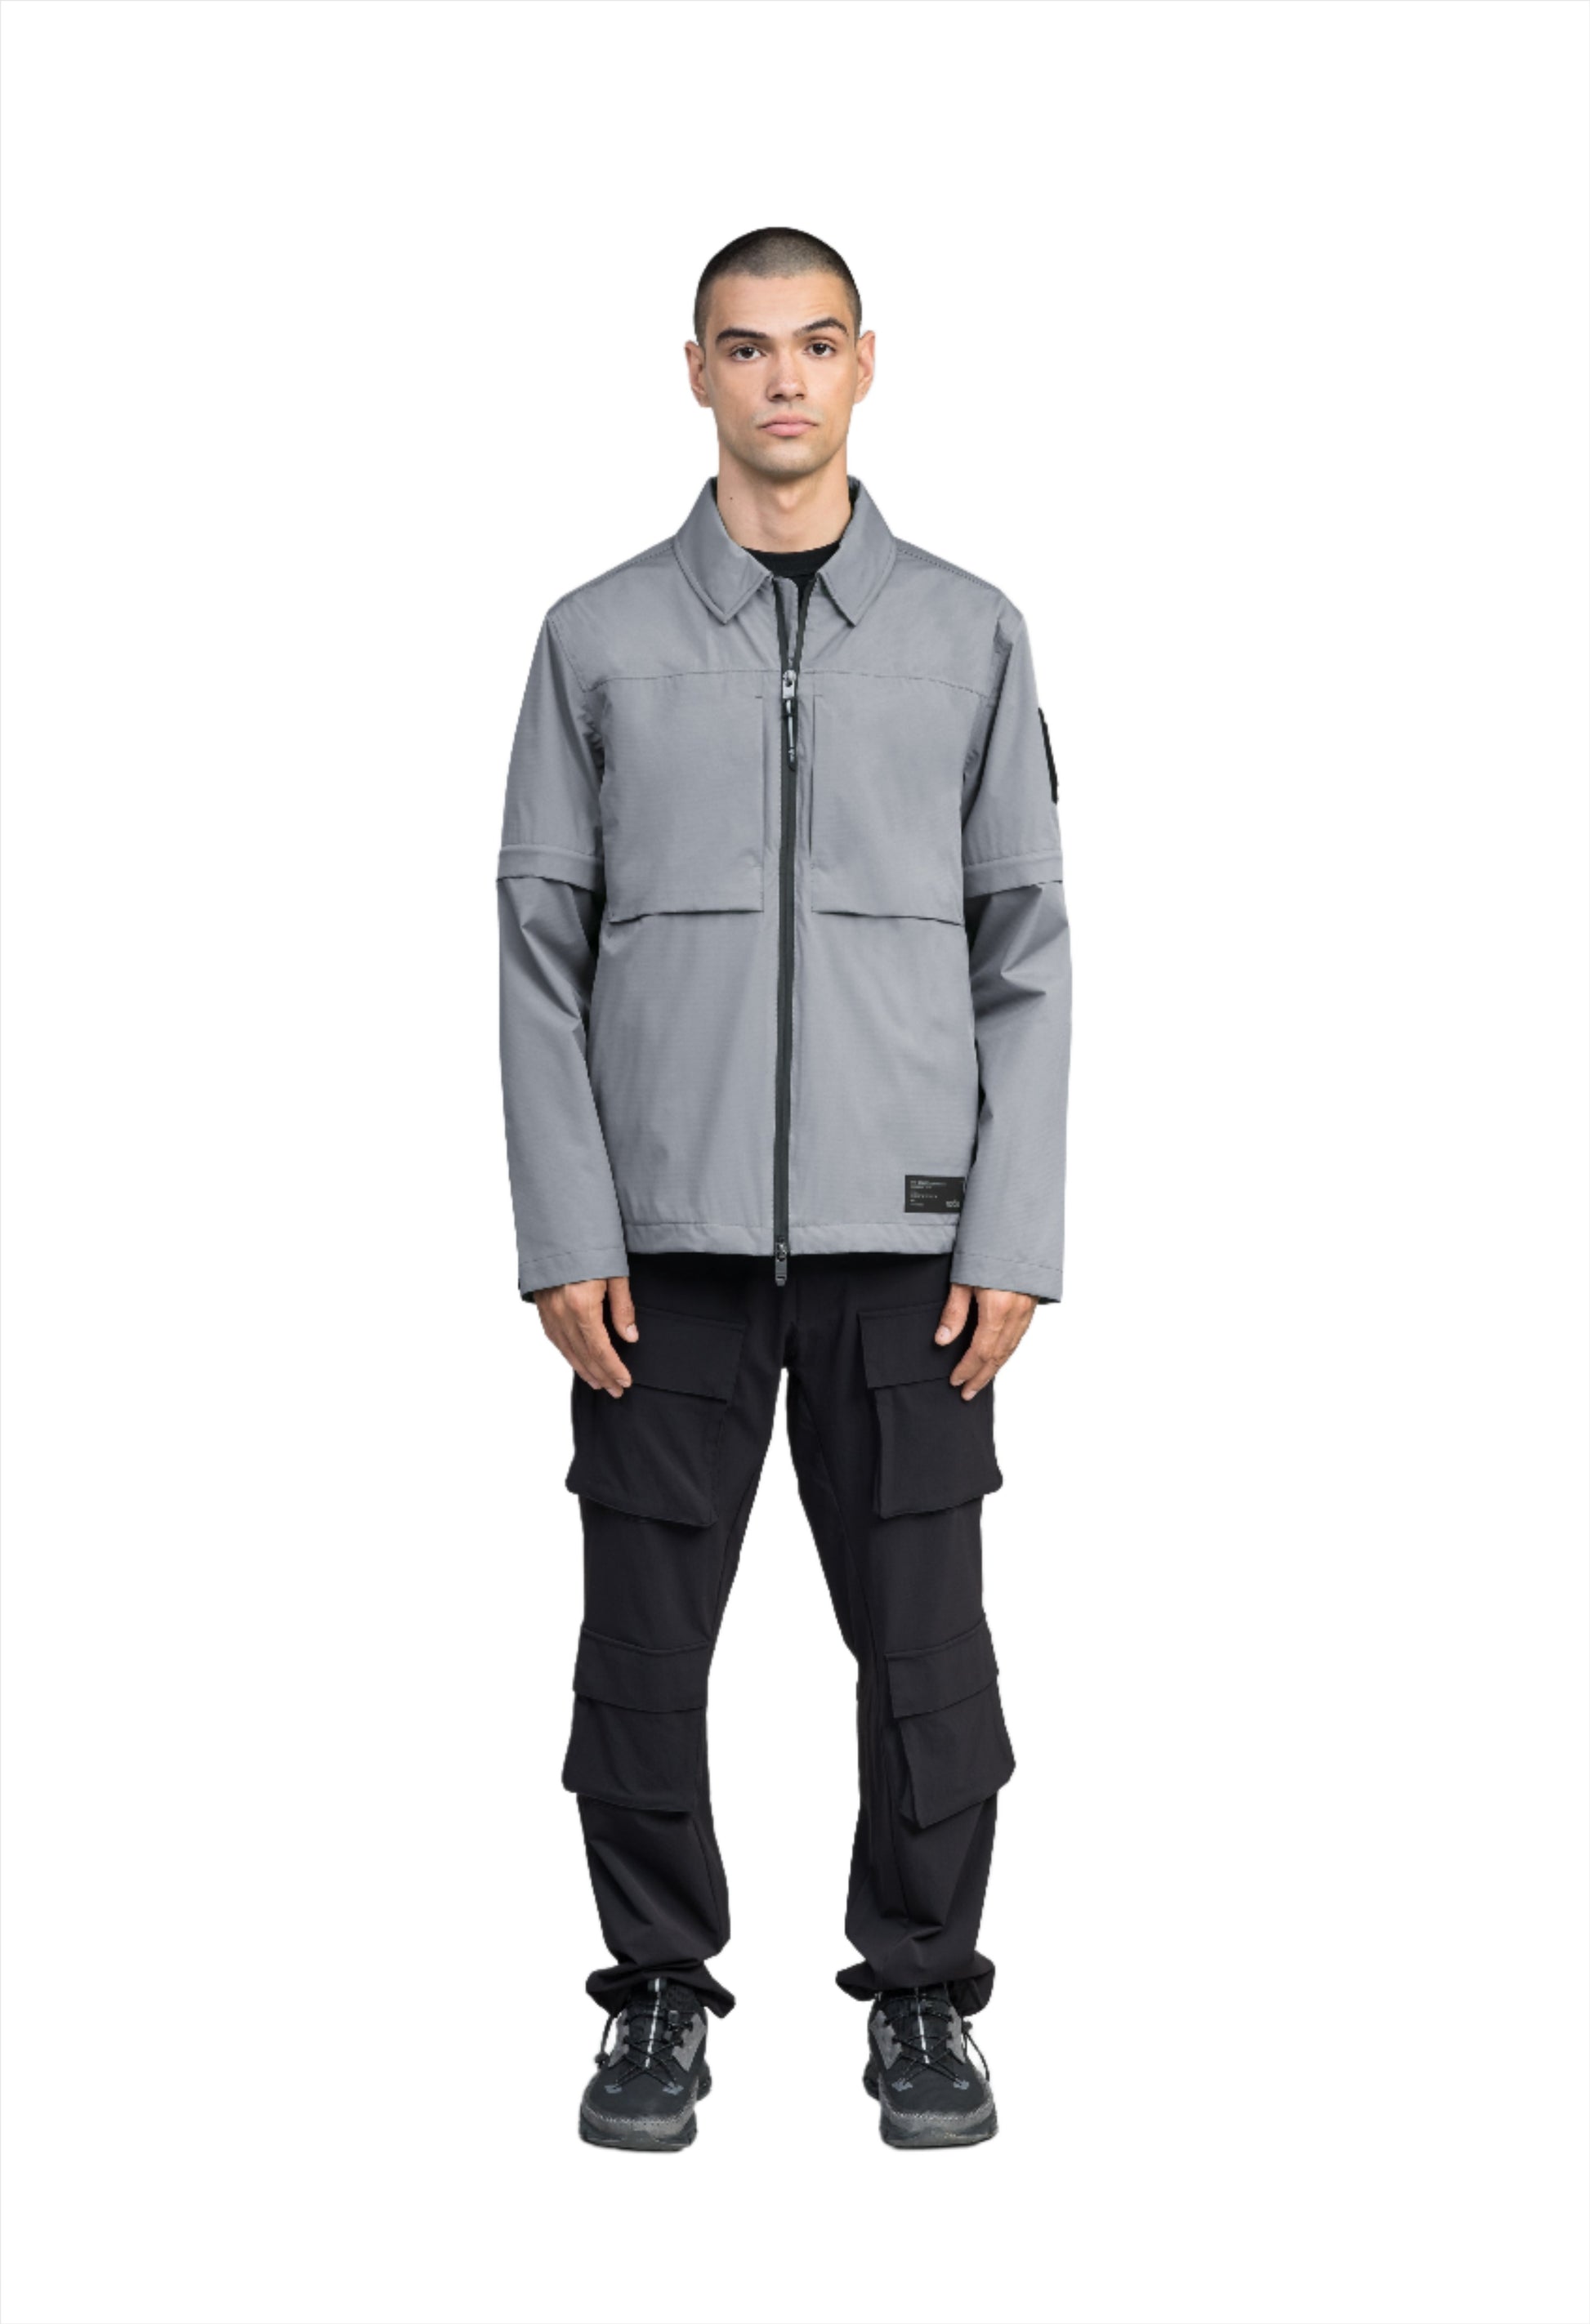 Thurlow Men's Performance Zip Off Sleeve Rain Shirt in hip length, convertible collar, patch chest zipper pockets, hidden in-seam pockets, zip off sleeves, centre front two-way zipper closure, in Concrete